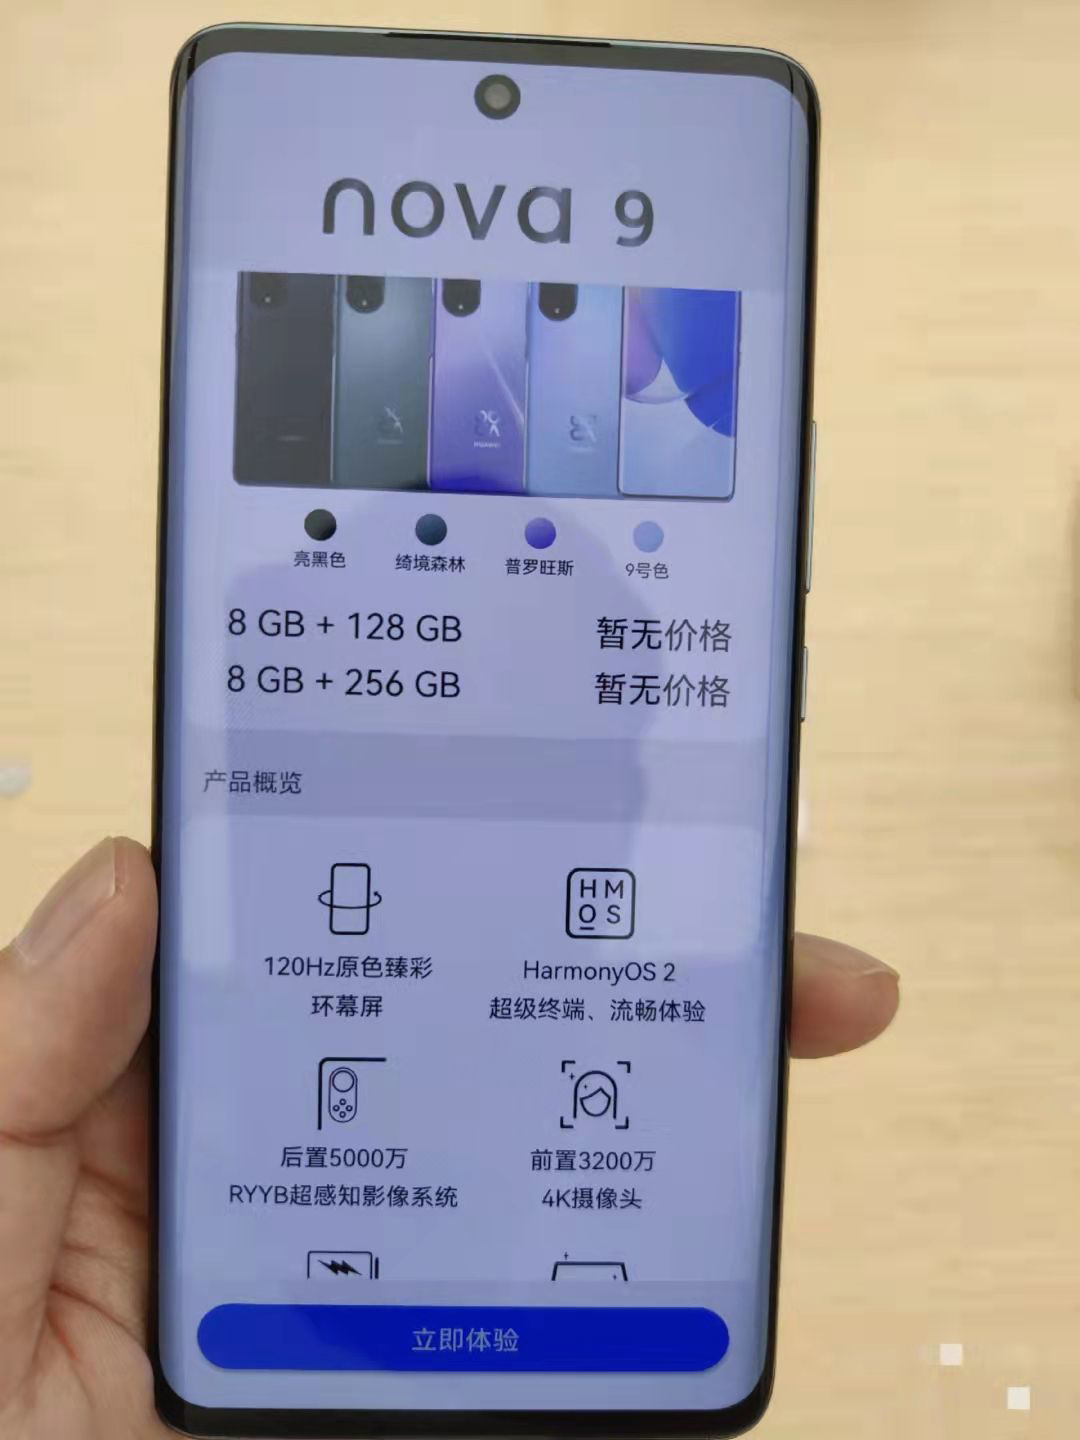  Huawei Nova 9 и Nova 9 Pro: фото и видео Huawei  - huawei_nova_9_i_nova_9_pro_na_zhivyh_foto_i_video_harakteristiki_1